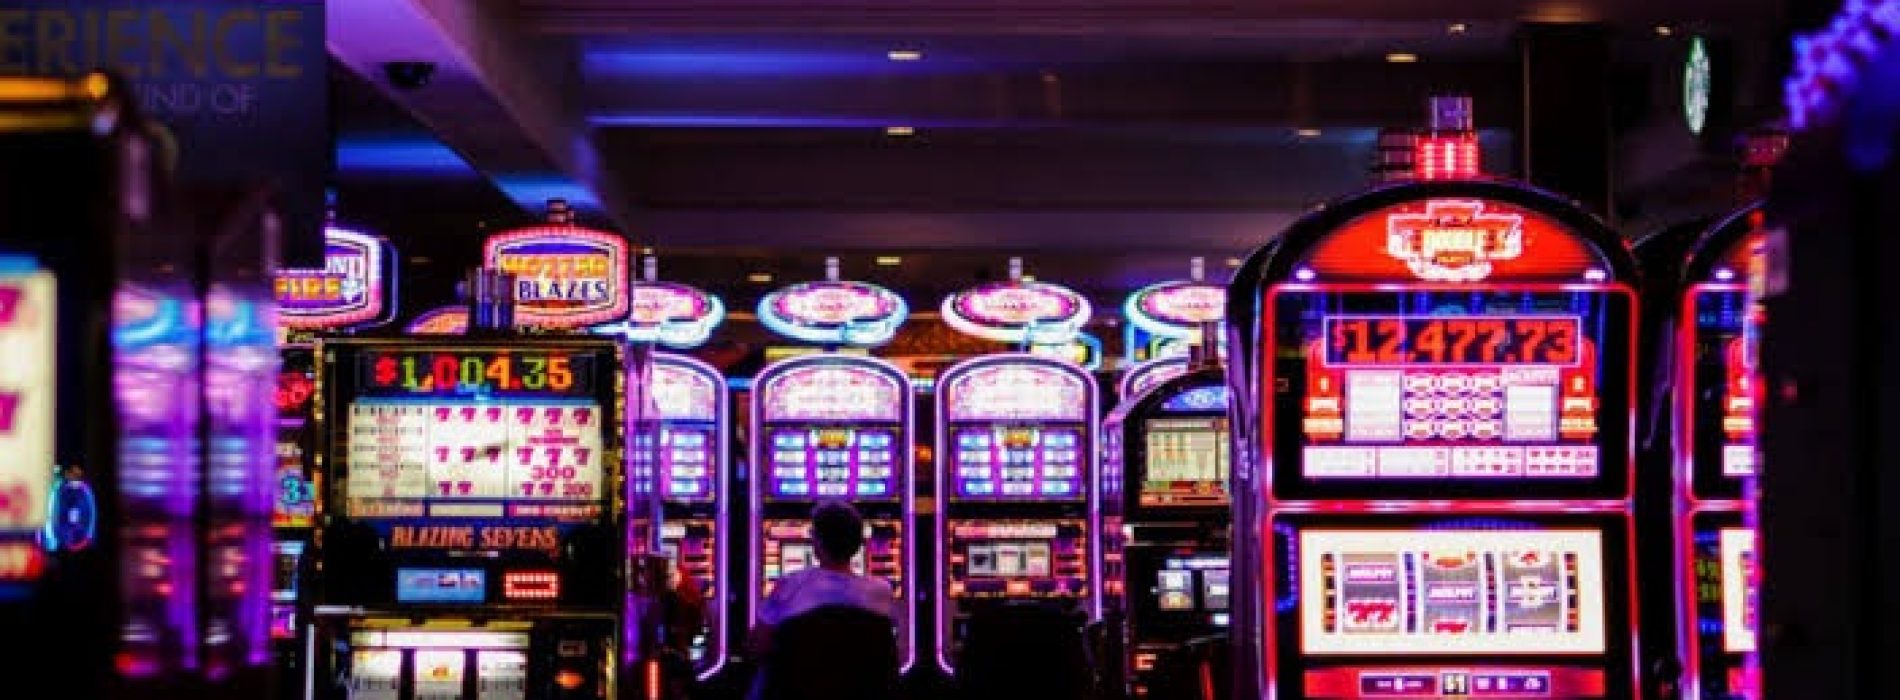 Deposit Delight: Unveiling Credit Wonders at Indoor Casino